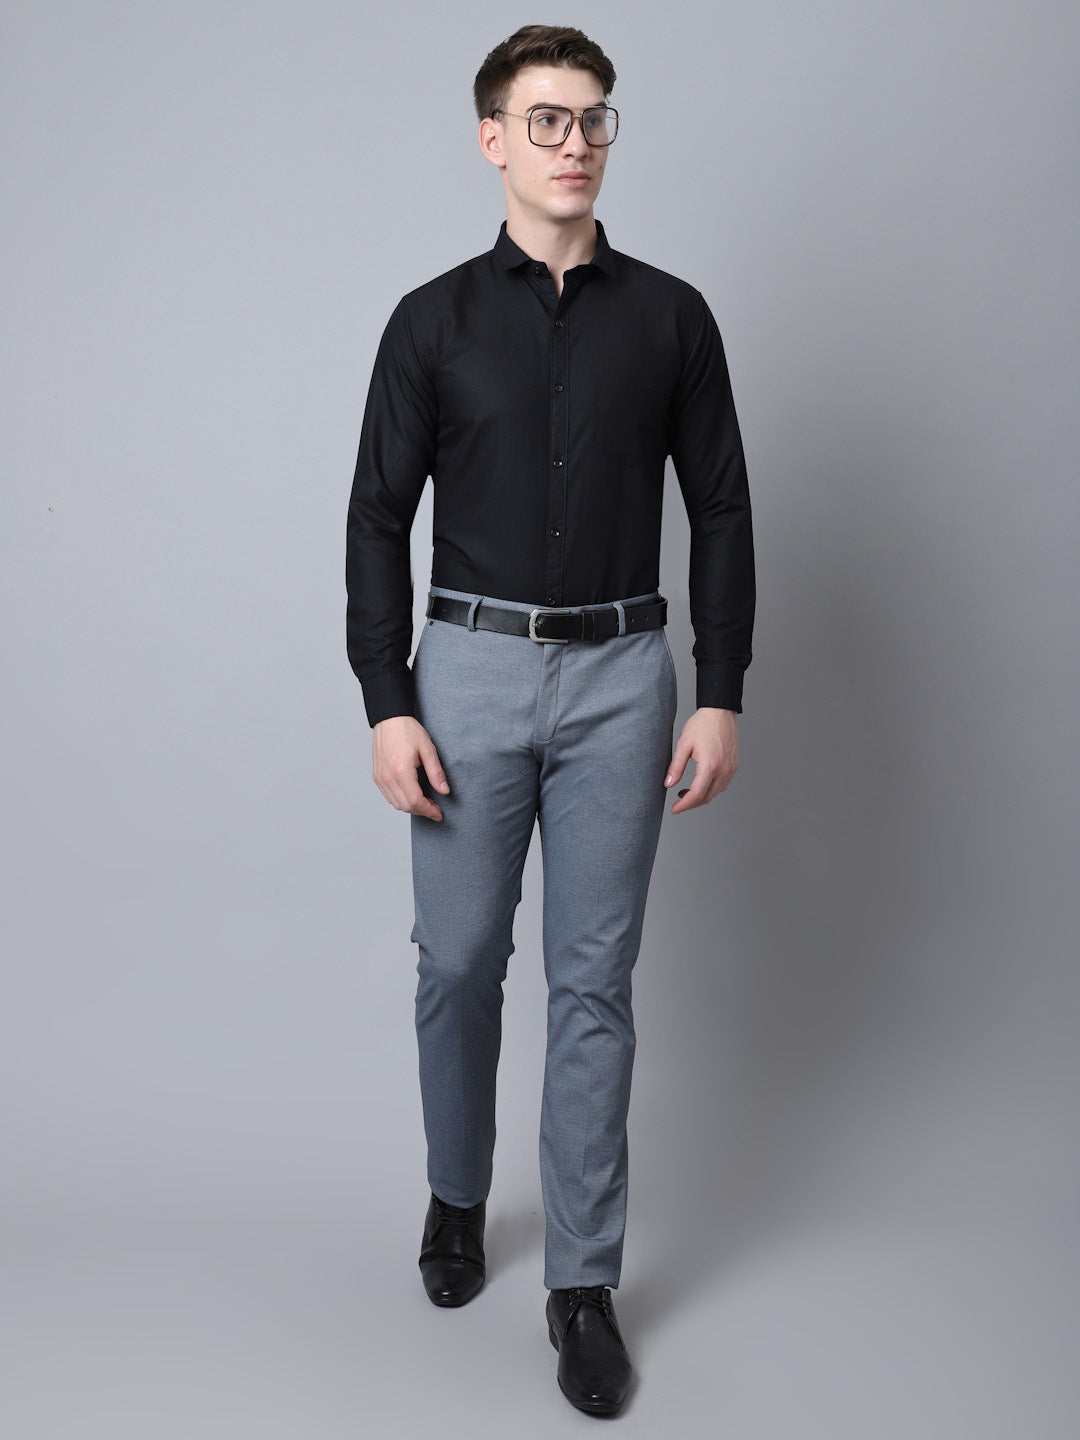 Majestic Man Versatile Solid Formal Shirt - Black